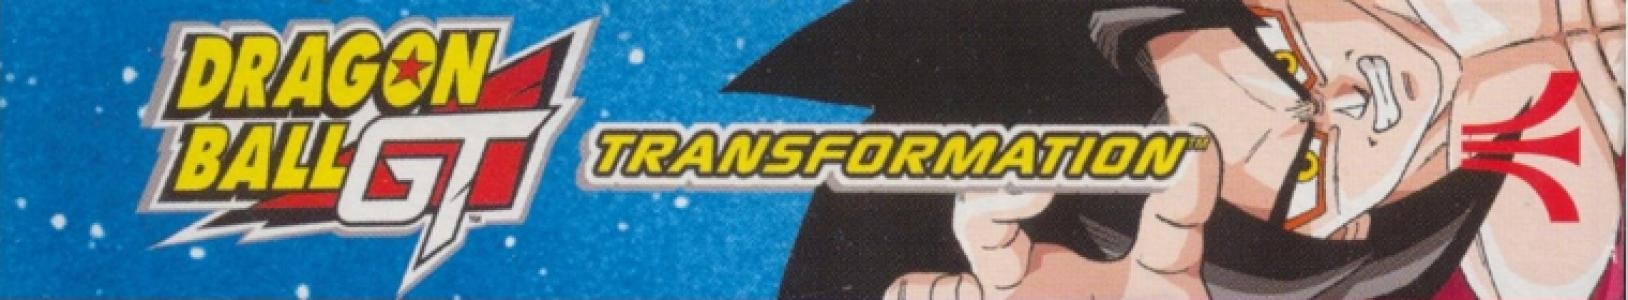 Dragon Ball GT: Transformation banner